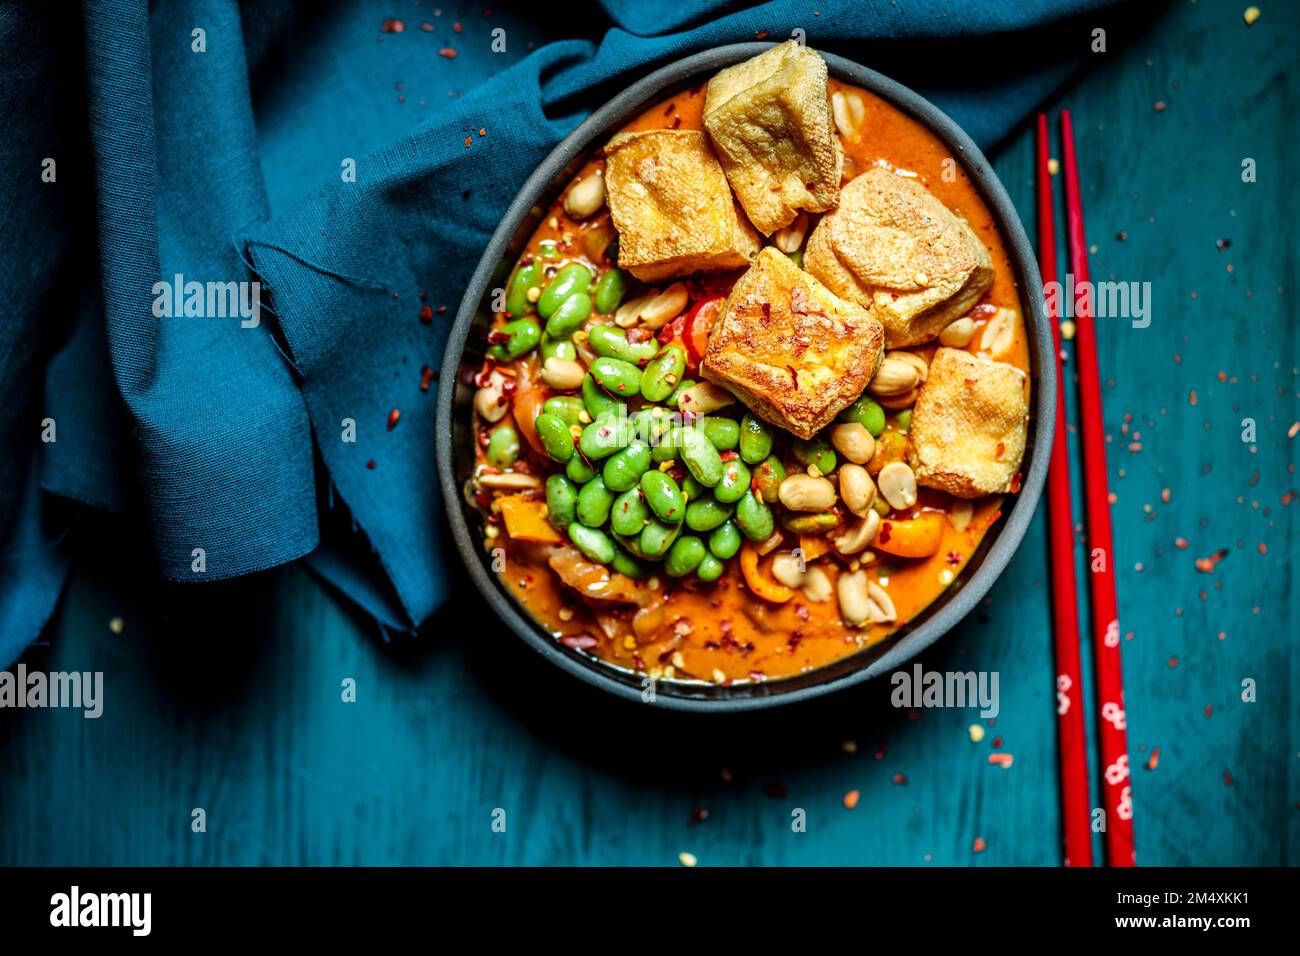 Schüssel mit verzehrfertigem veganem Curry mit Edamam und Tofu Stockfoto